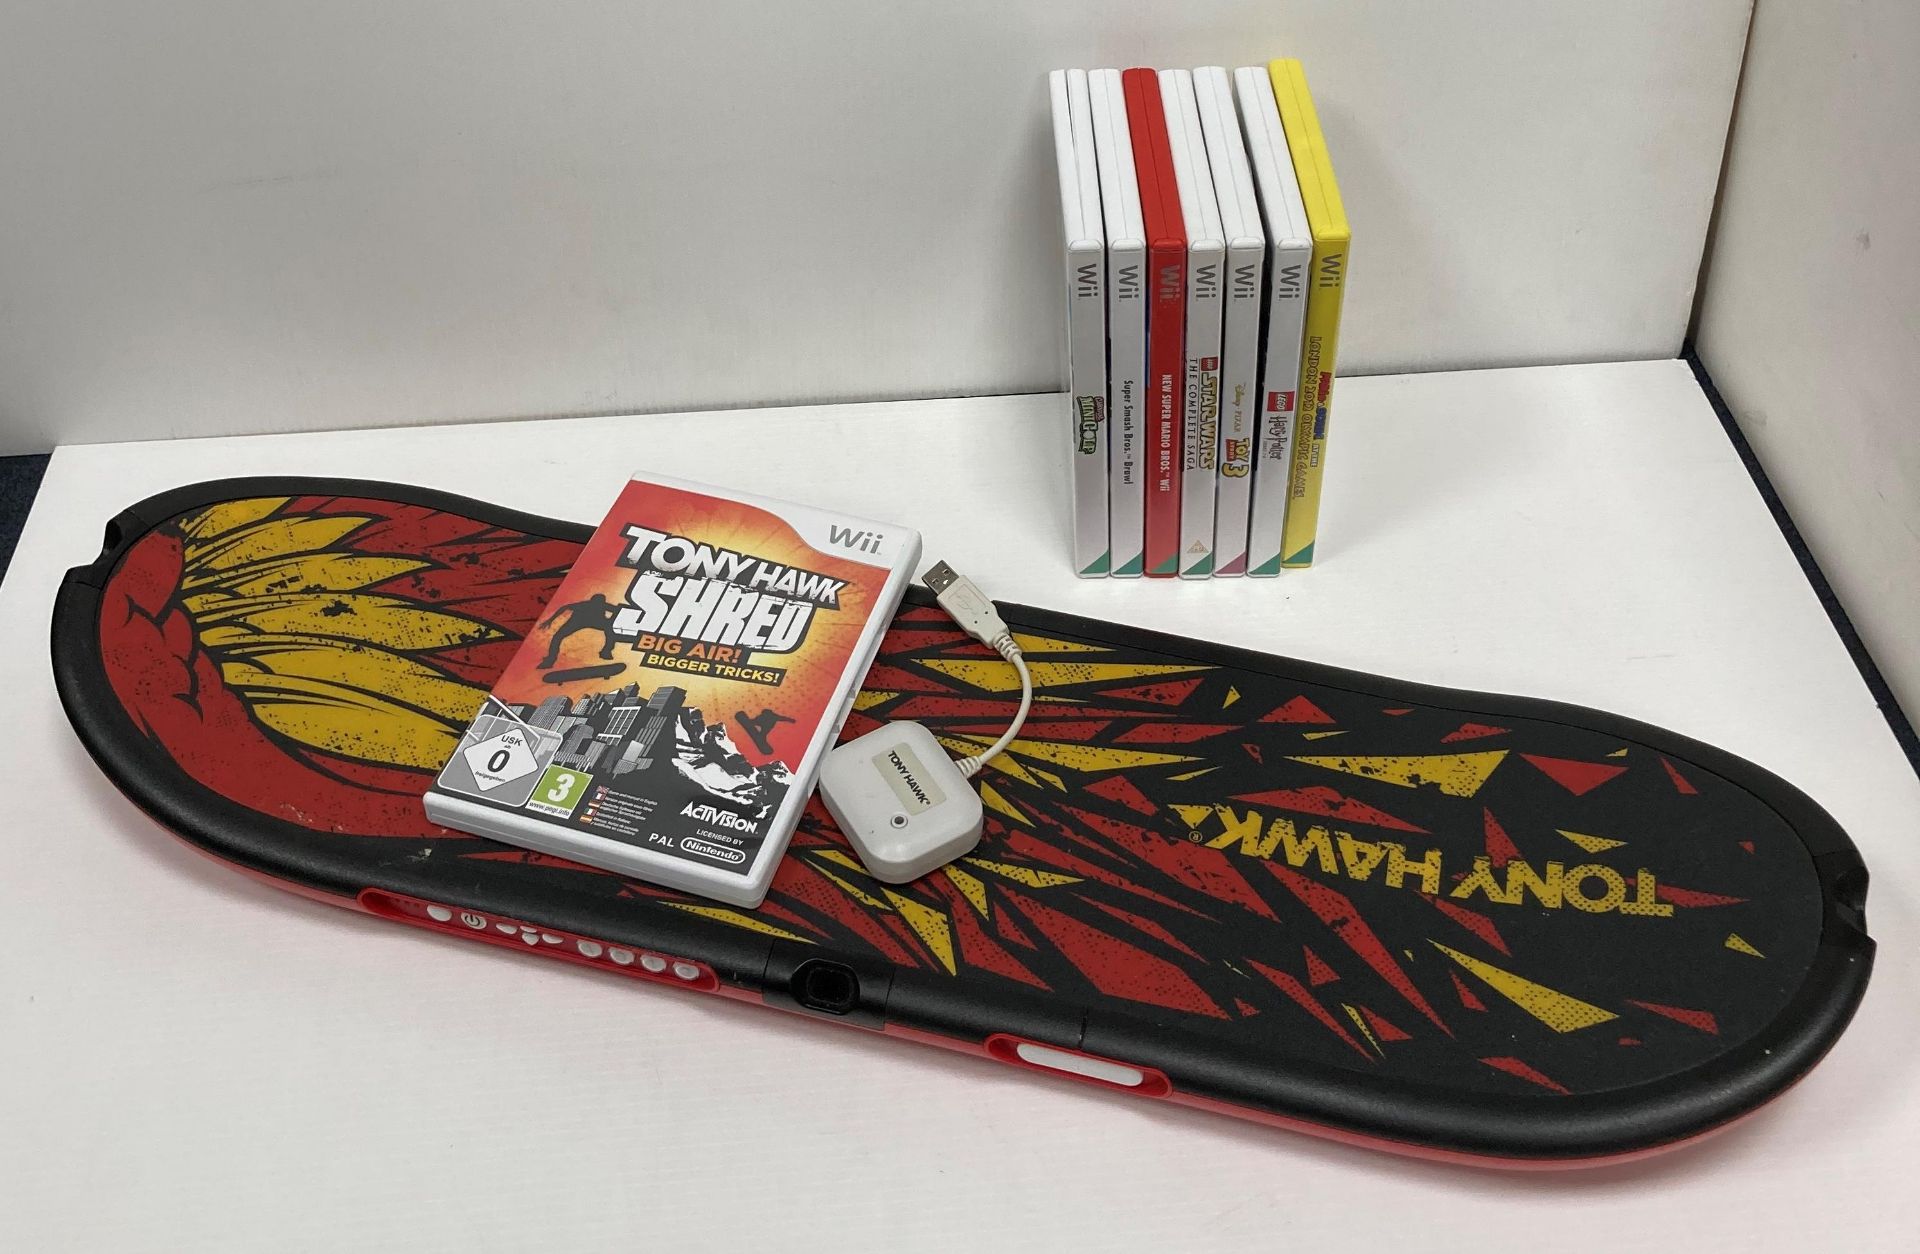 Nintendo Wii game Tony Hawk Shred complete with Tony Hawk wireless skateboard,